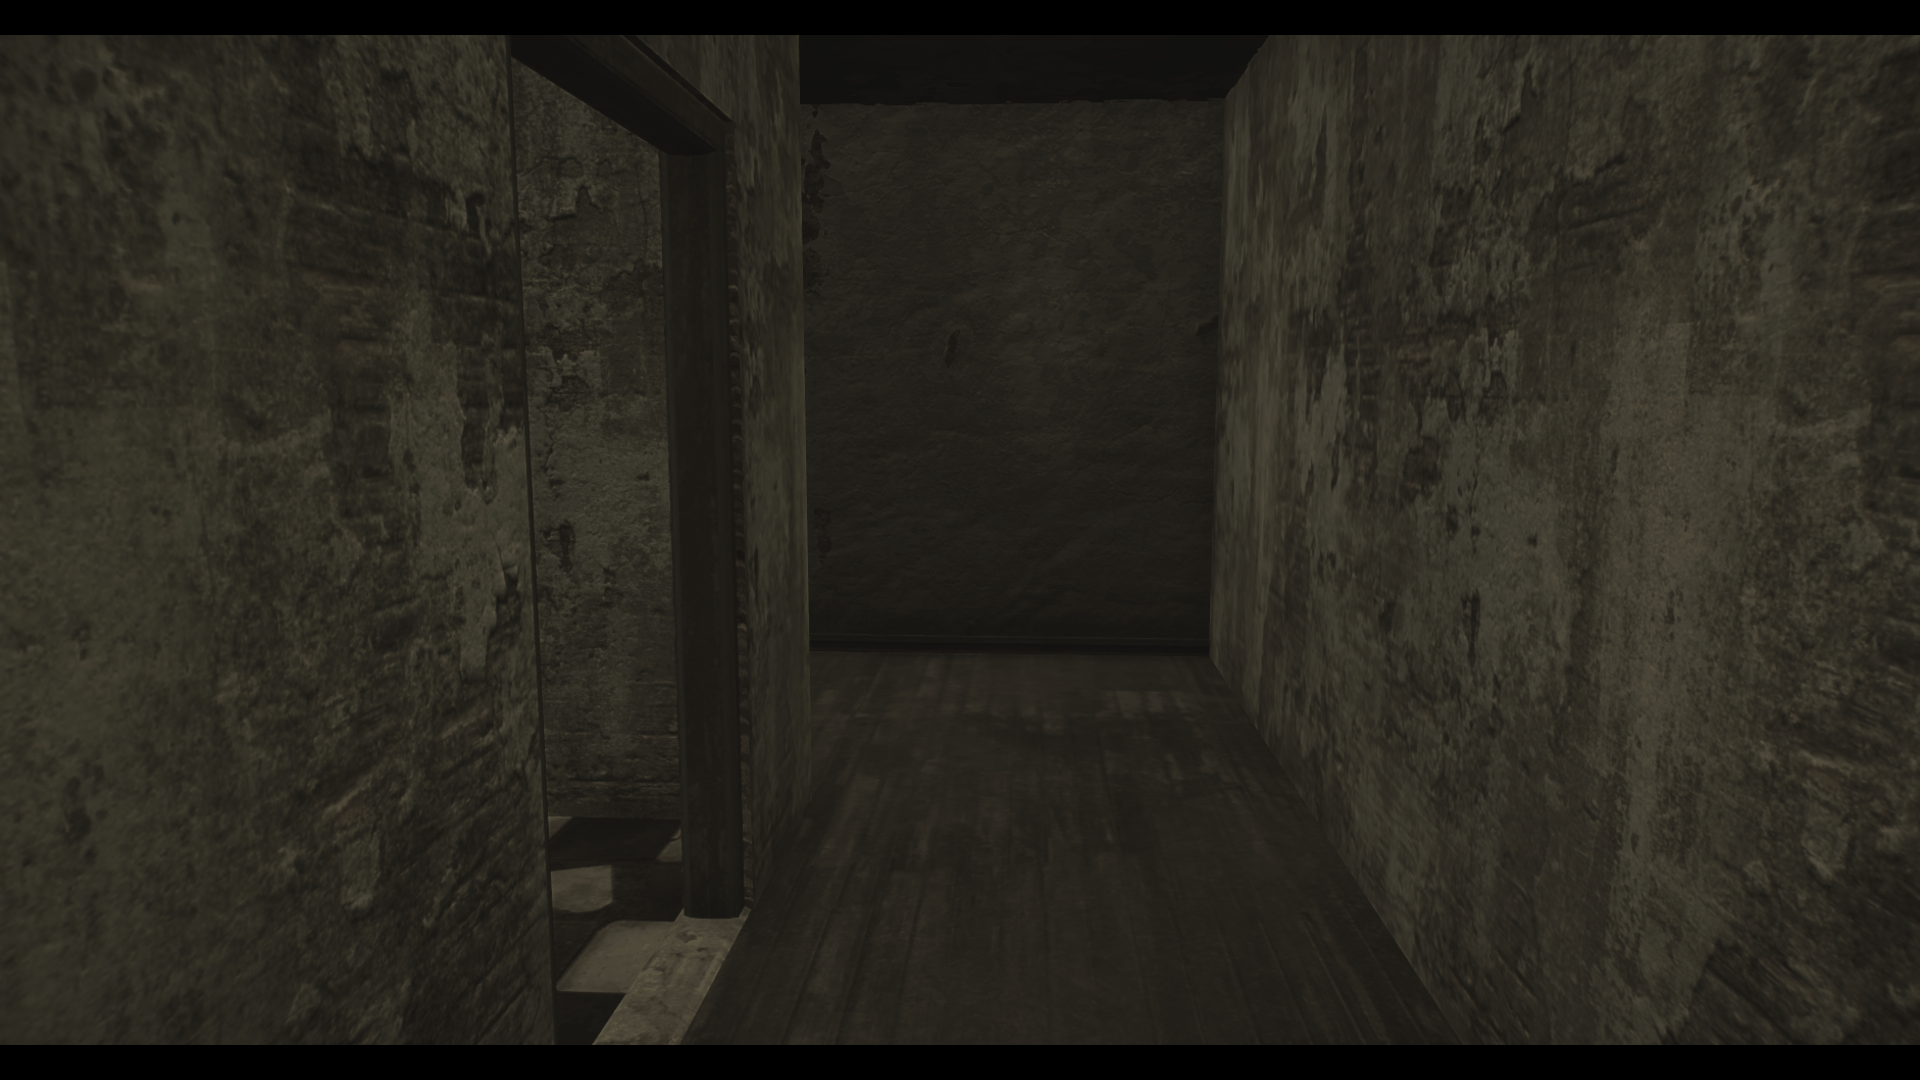 Fallout 4 Player Home Mods: Underhouse, Bunker 13, Goodneighbor Apartment 